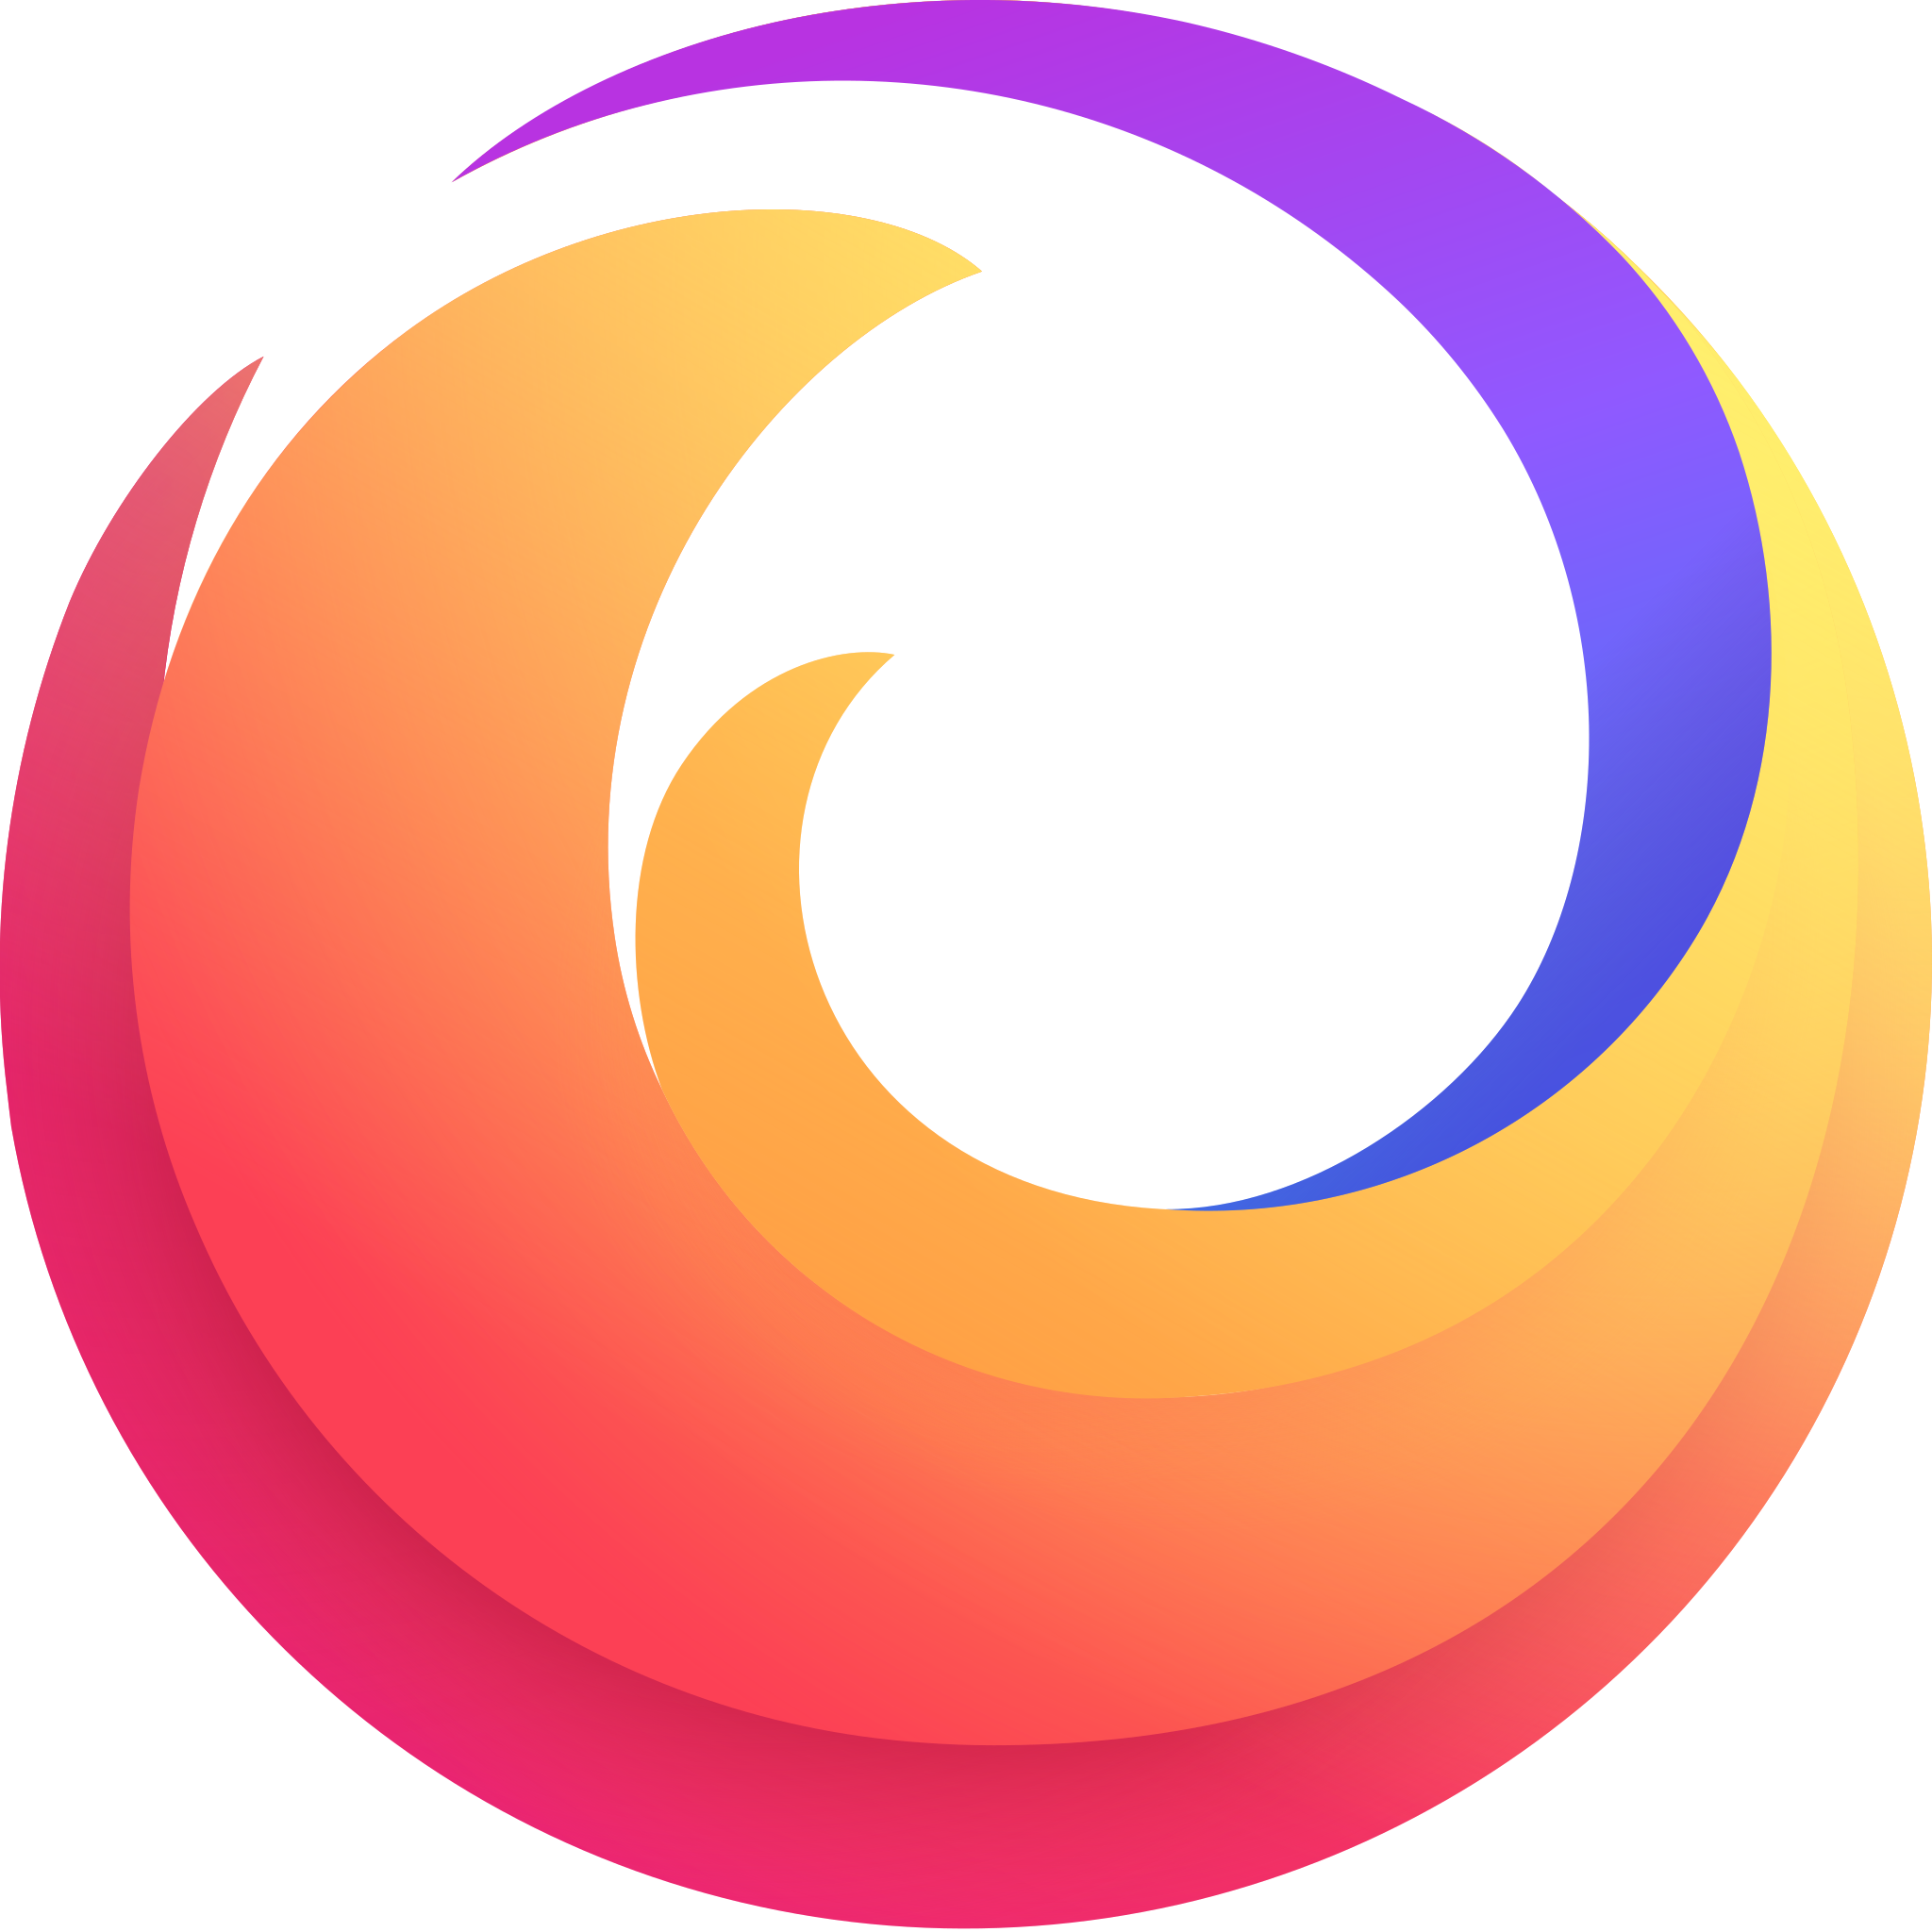 File:Firefox brand logo, 2019.svg - Wikimedia Commons